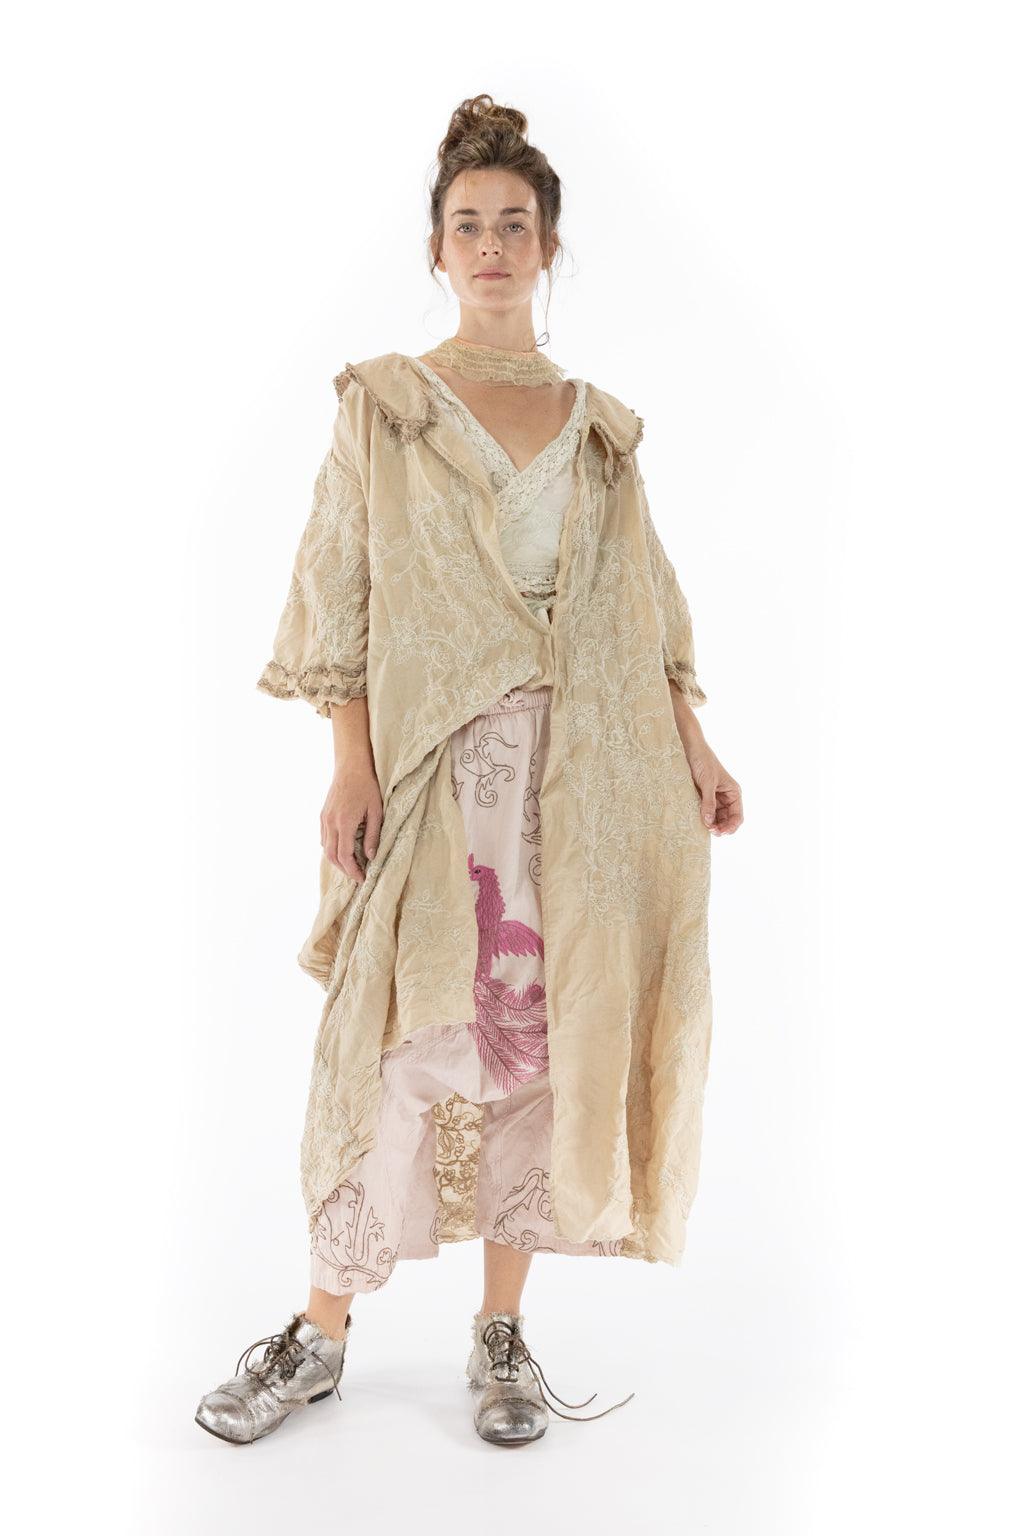 Emmali Kimono - Magnolia Pearl Clothing